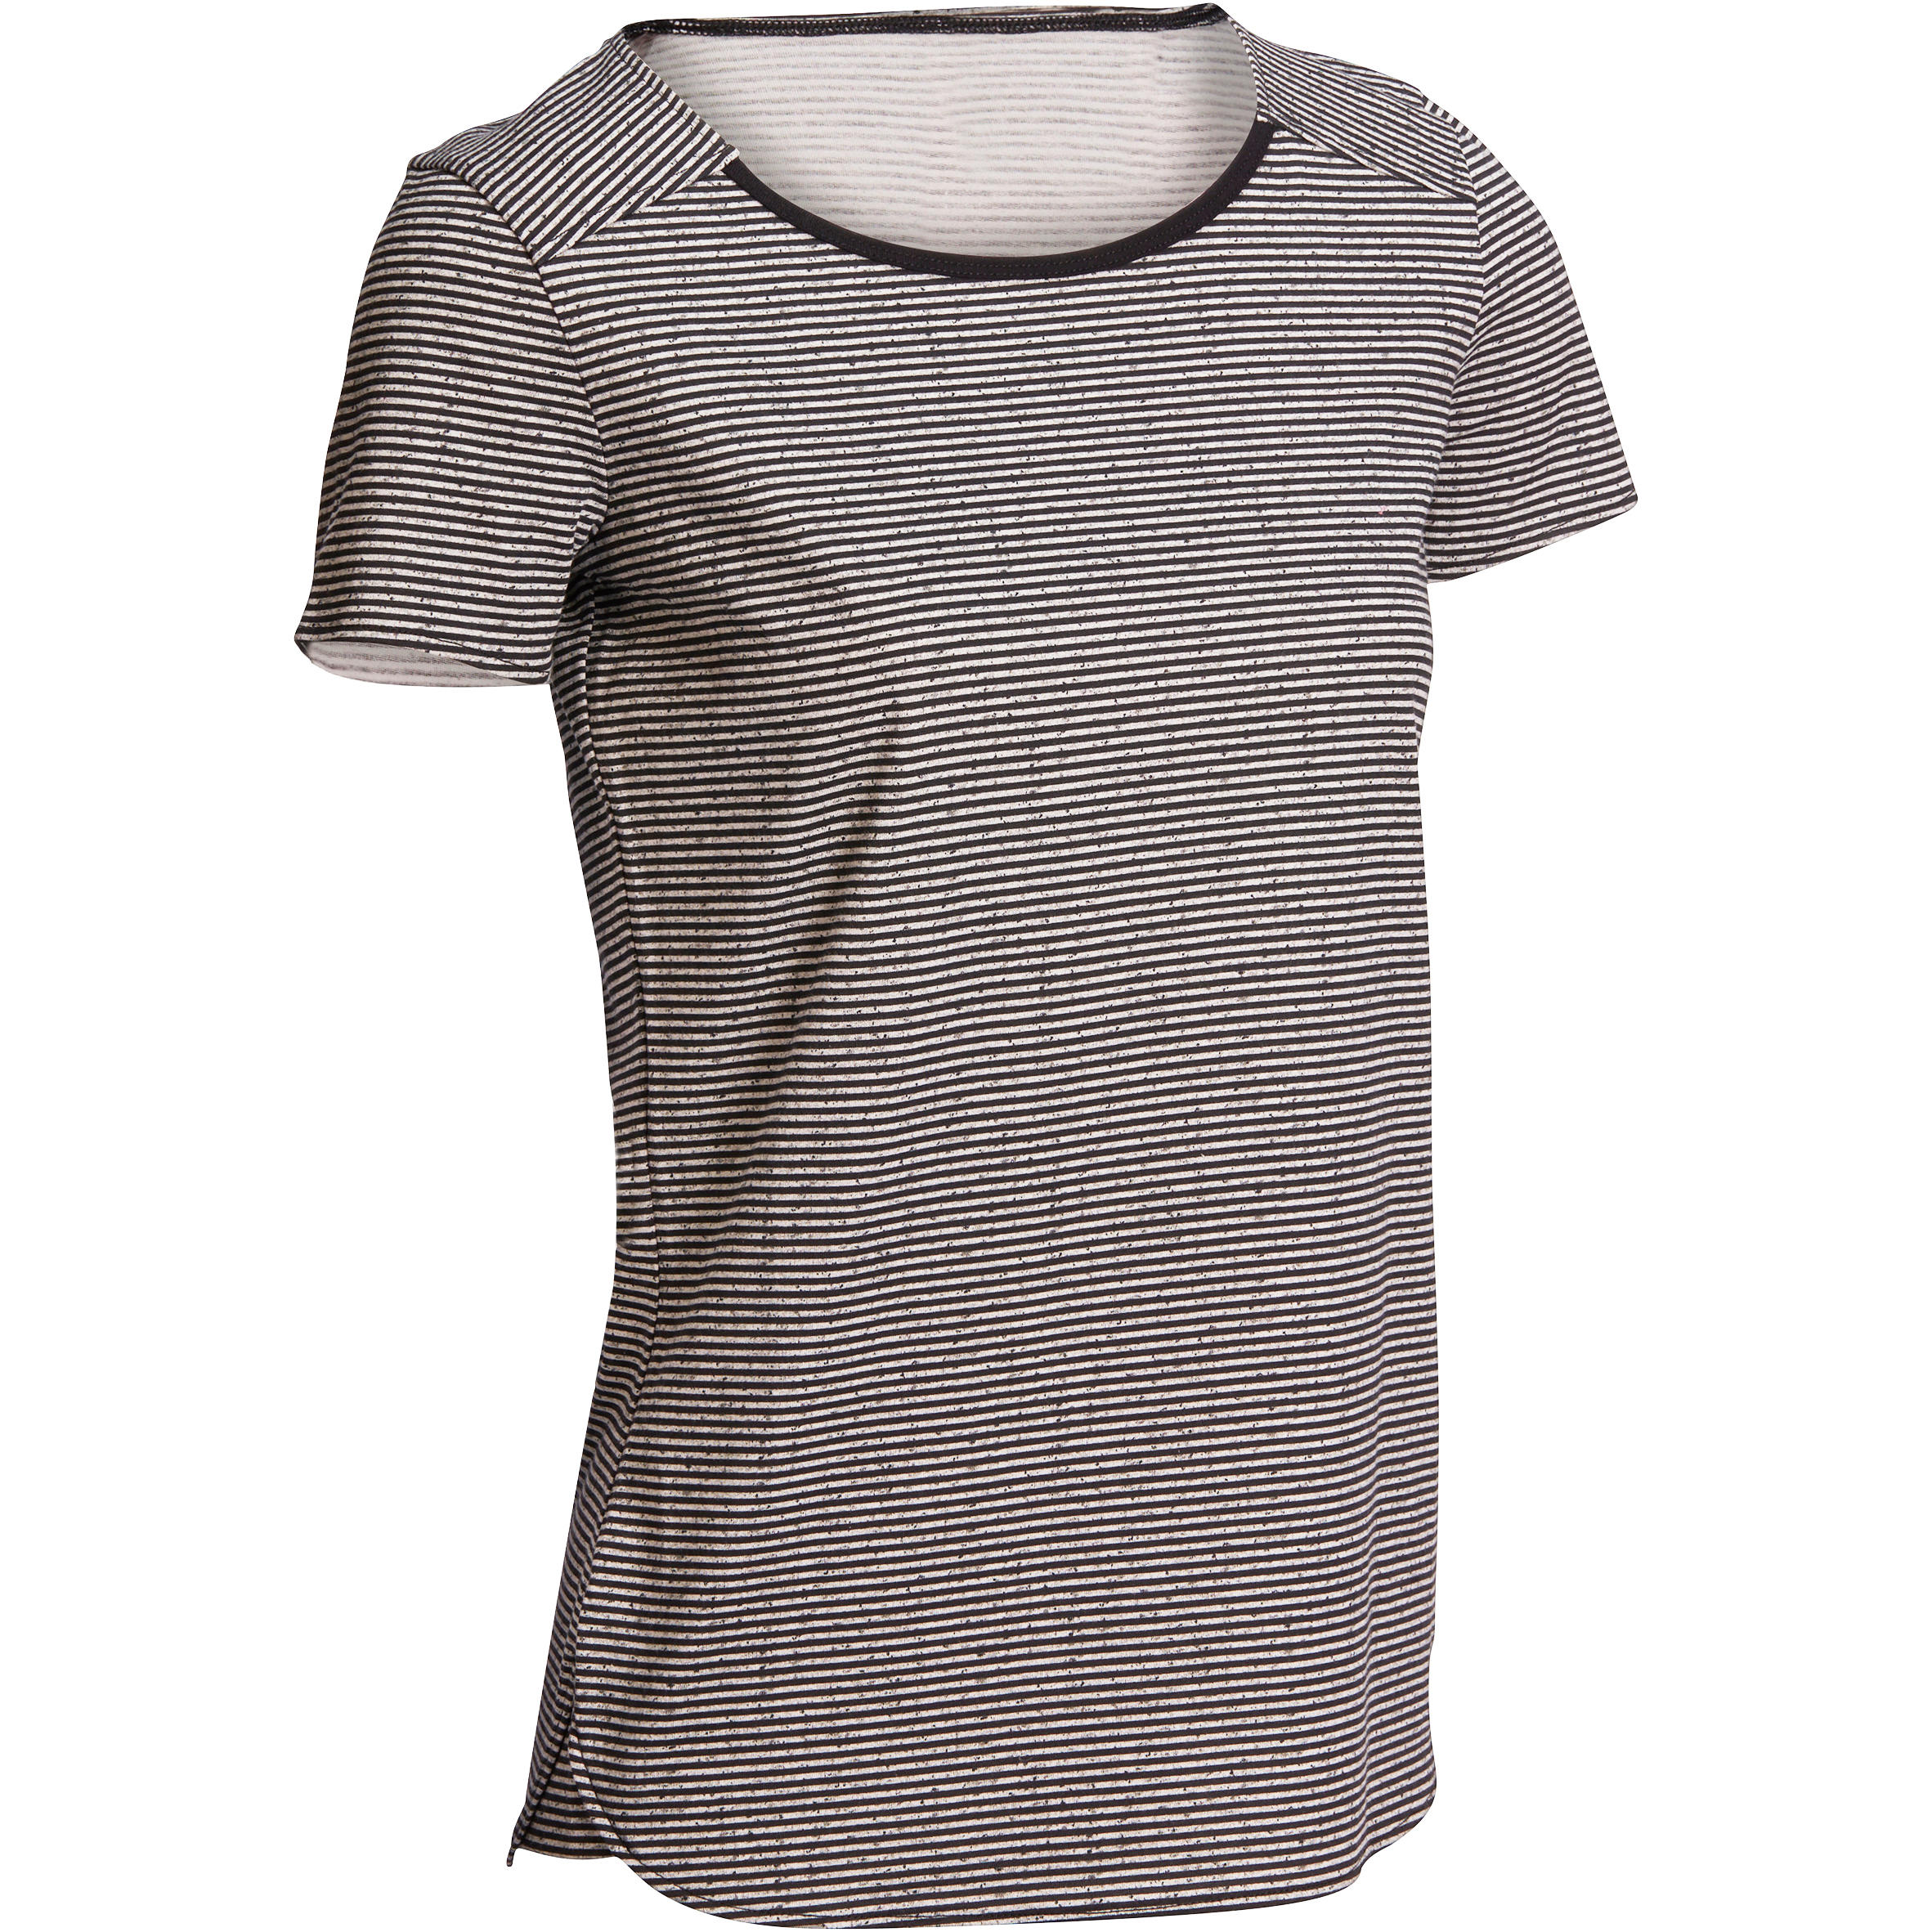 DOMYOS Women's Gym and Pilates T-Shirt - Striped Grey